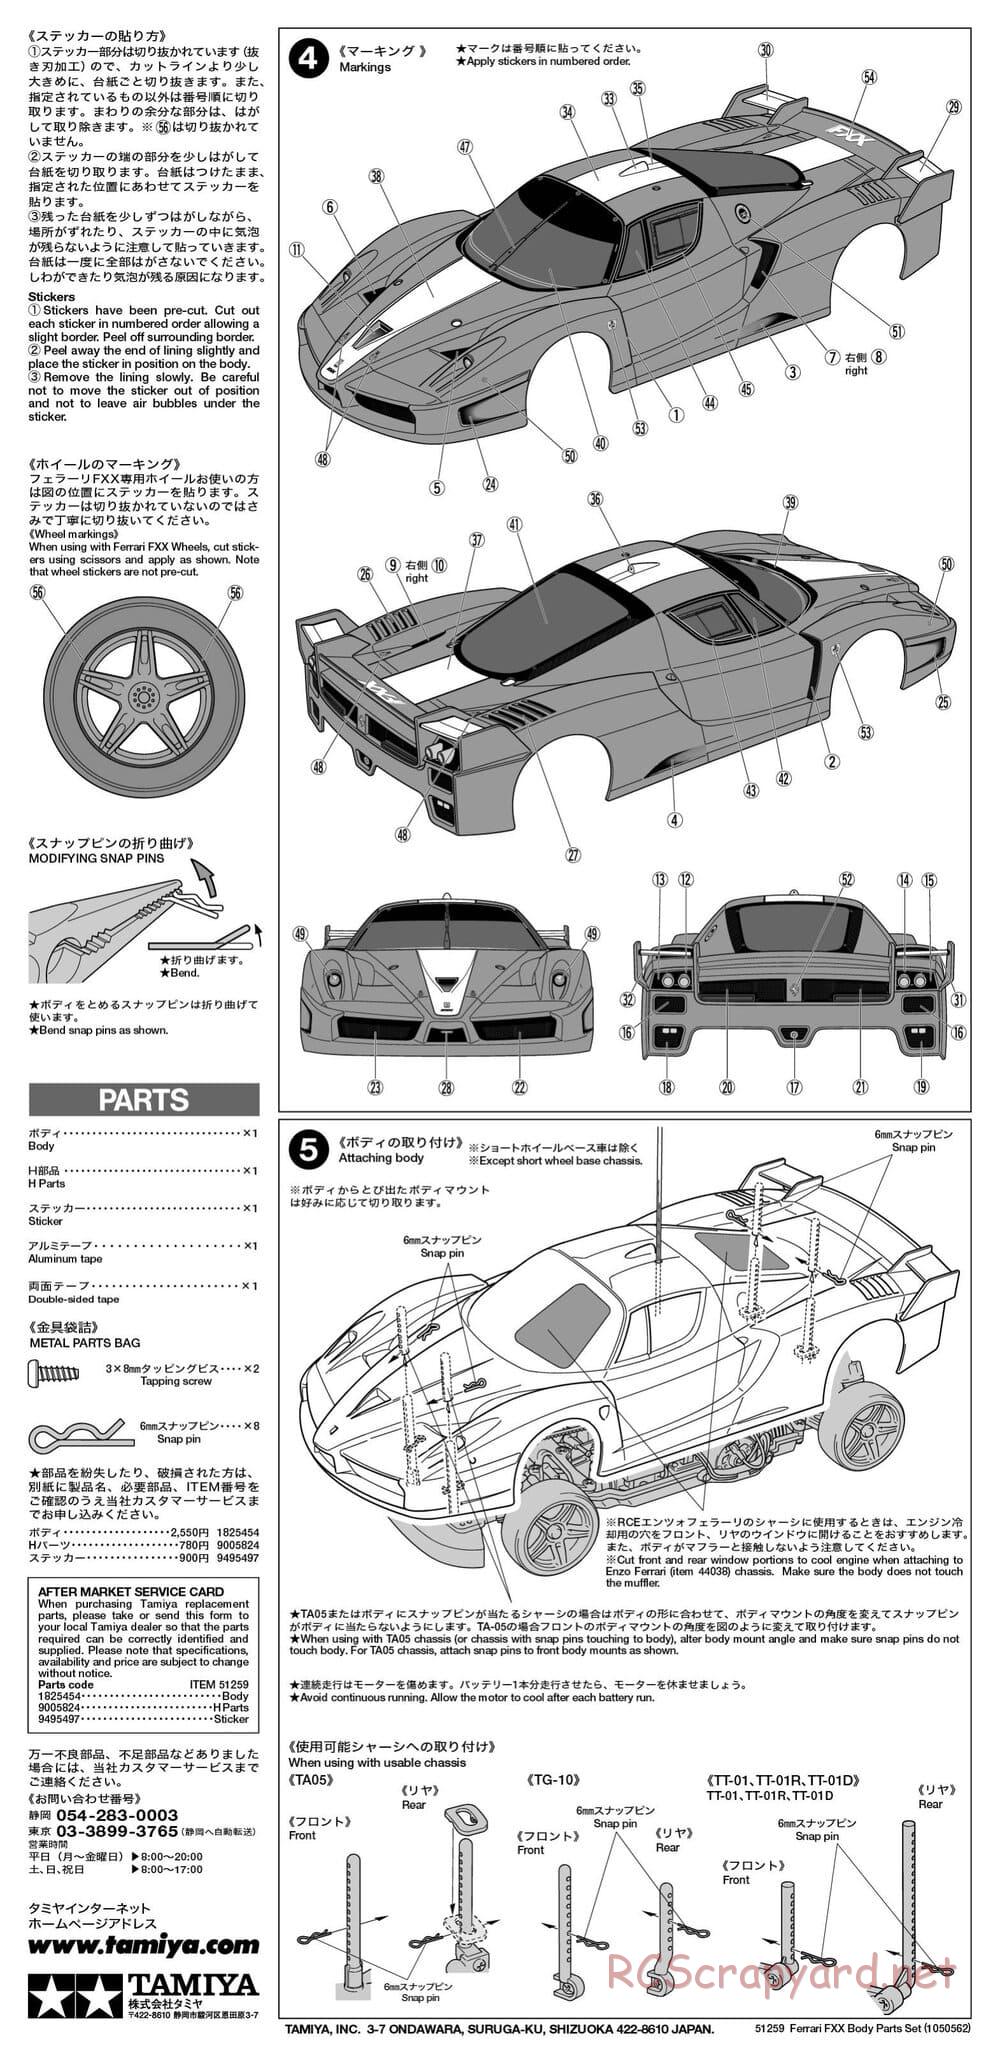 Tamiya - Ferrari FXX - TT-01 Chassis - Body Manual - Page 2